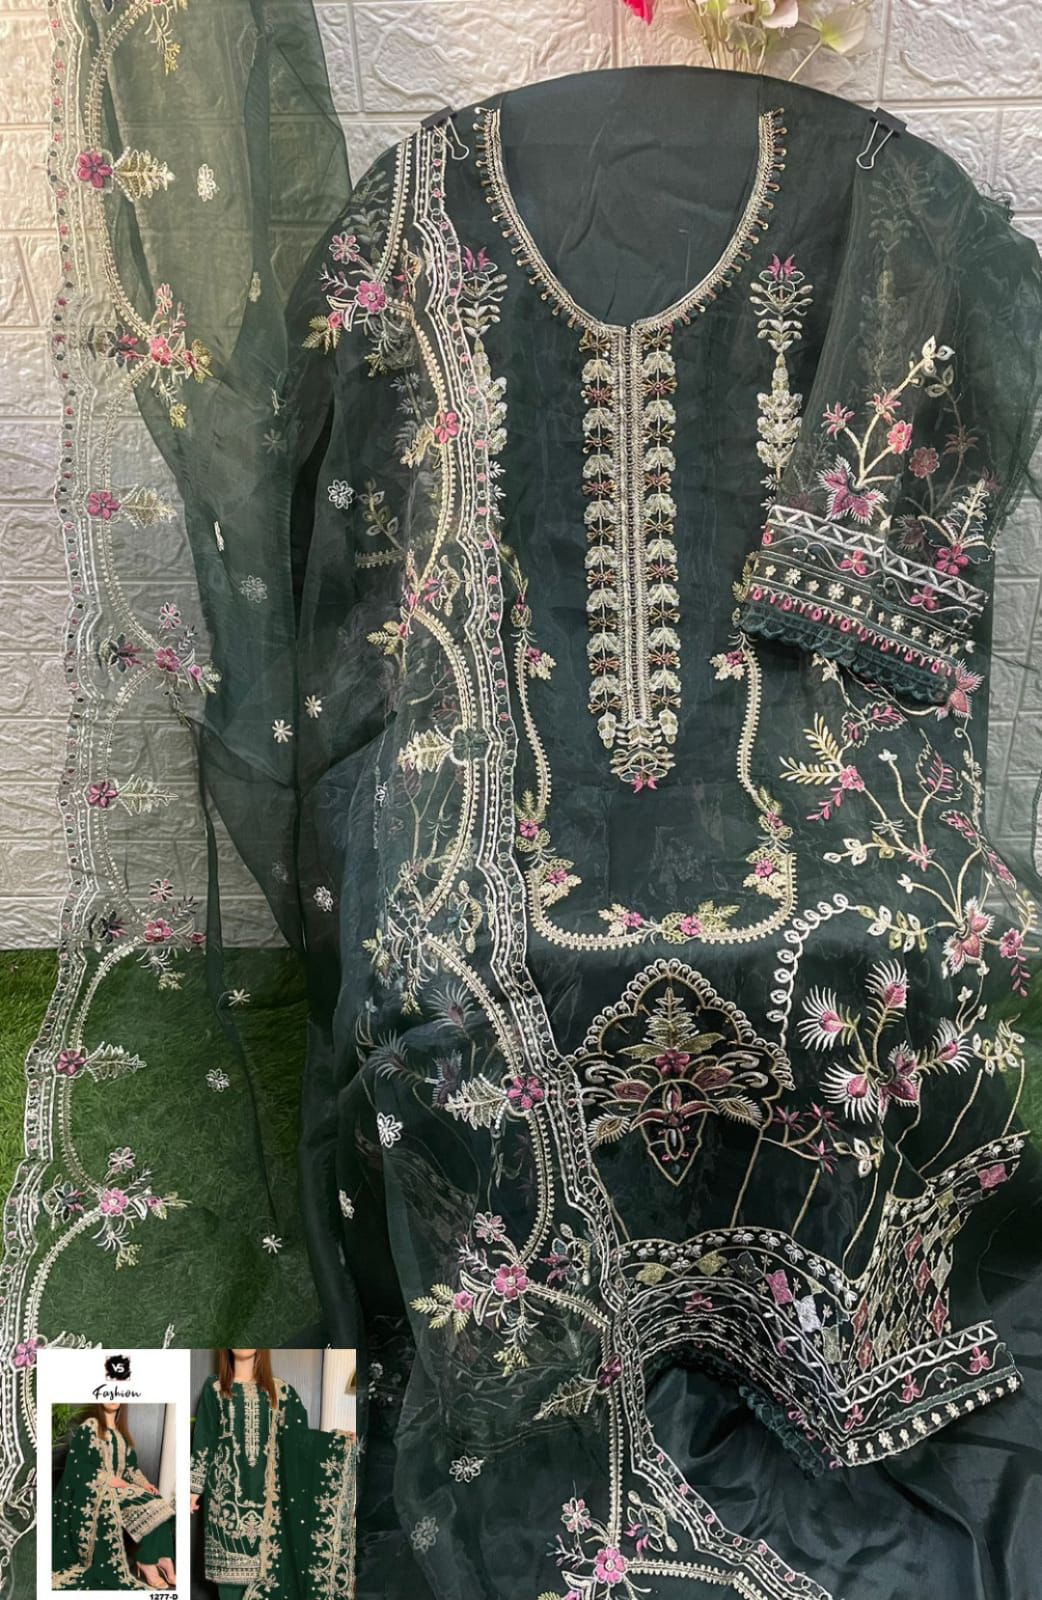 Buy Organza Embroidery Vs 1277 Vs Fashion Pakistani Salwar S